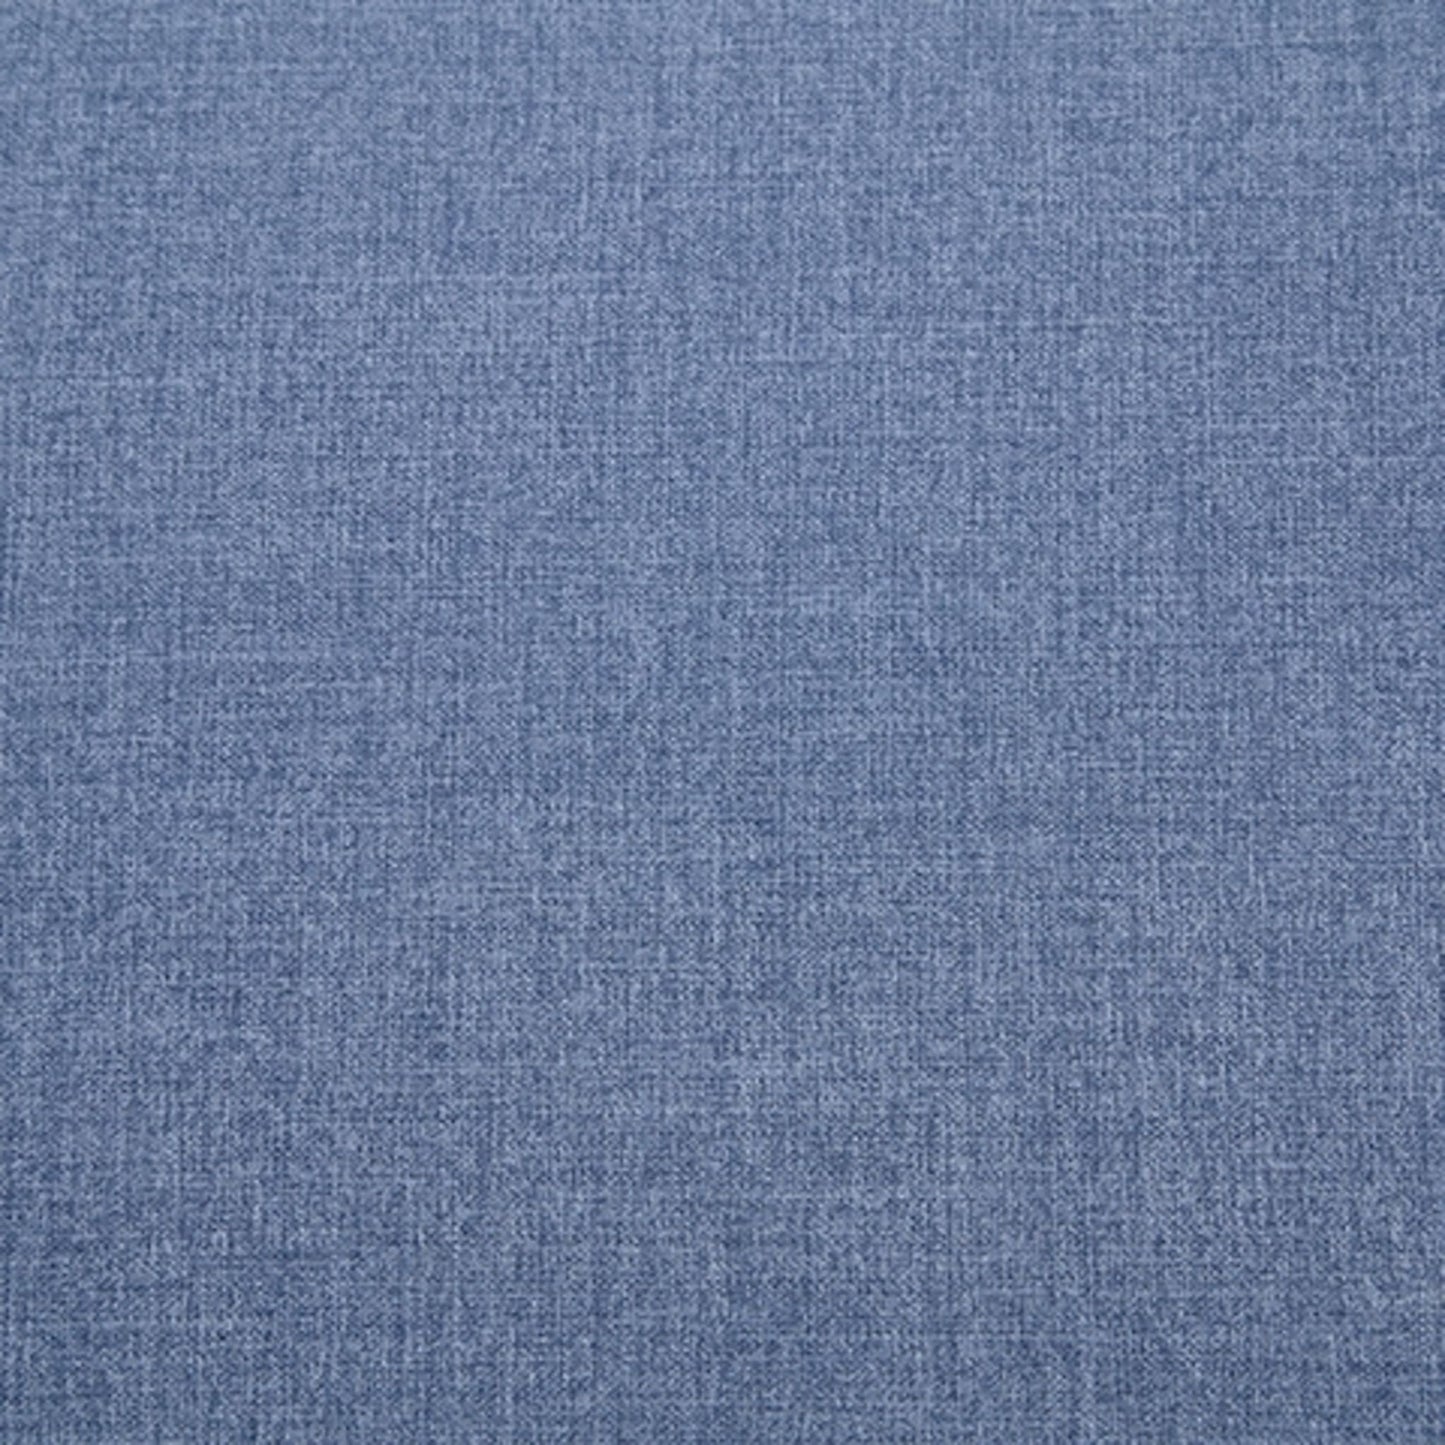 Hansridge Accent Chair - Blue